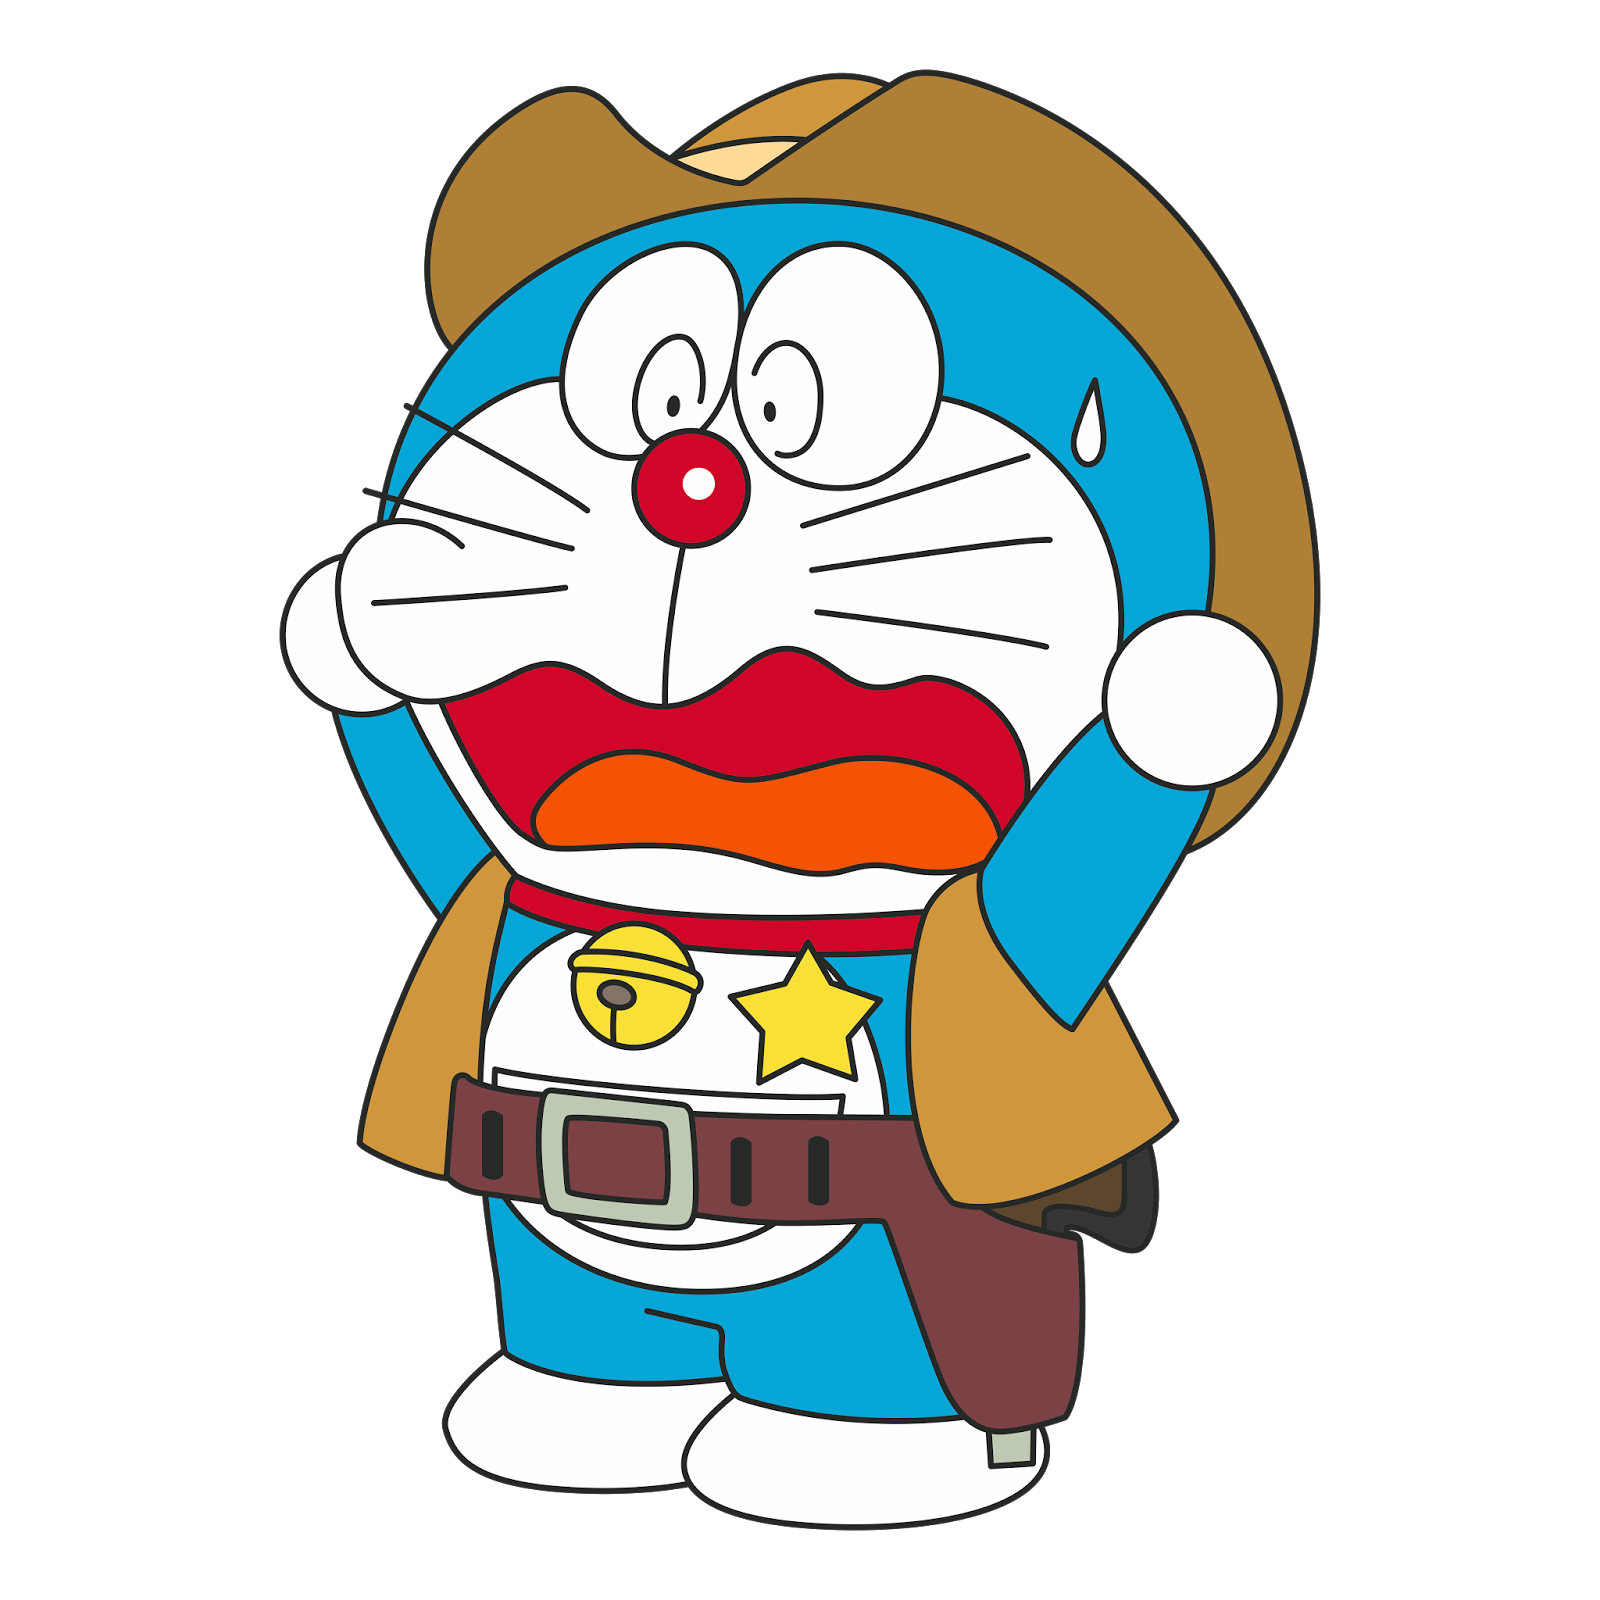 Foto Lucu Kartun Doraemon Pos DP BBM